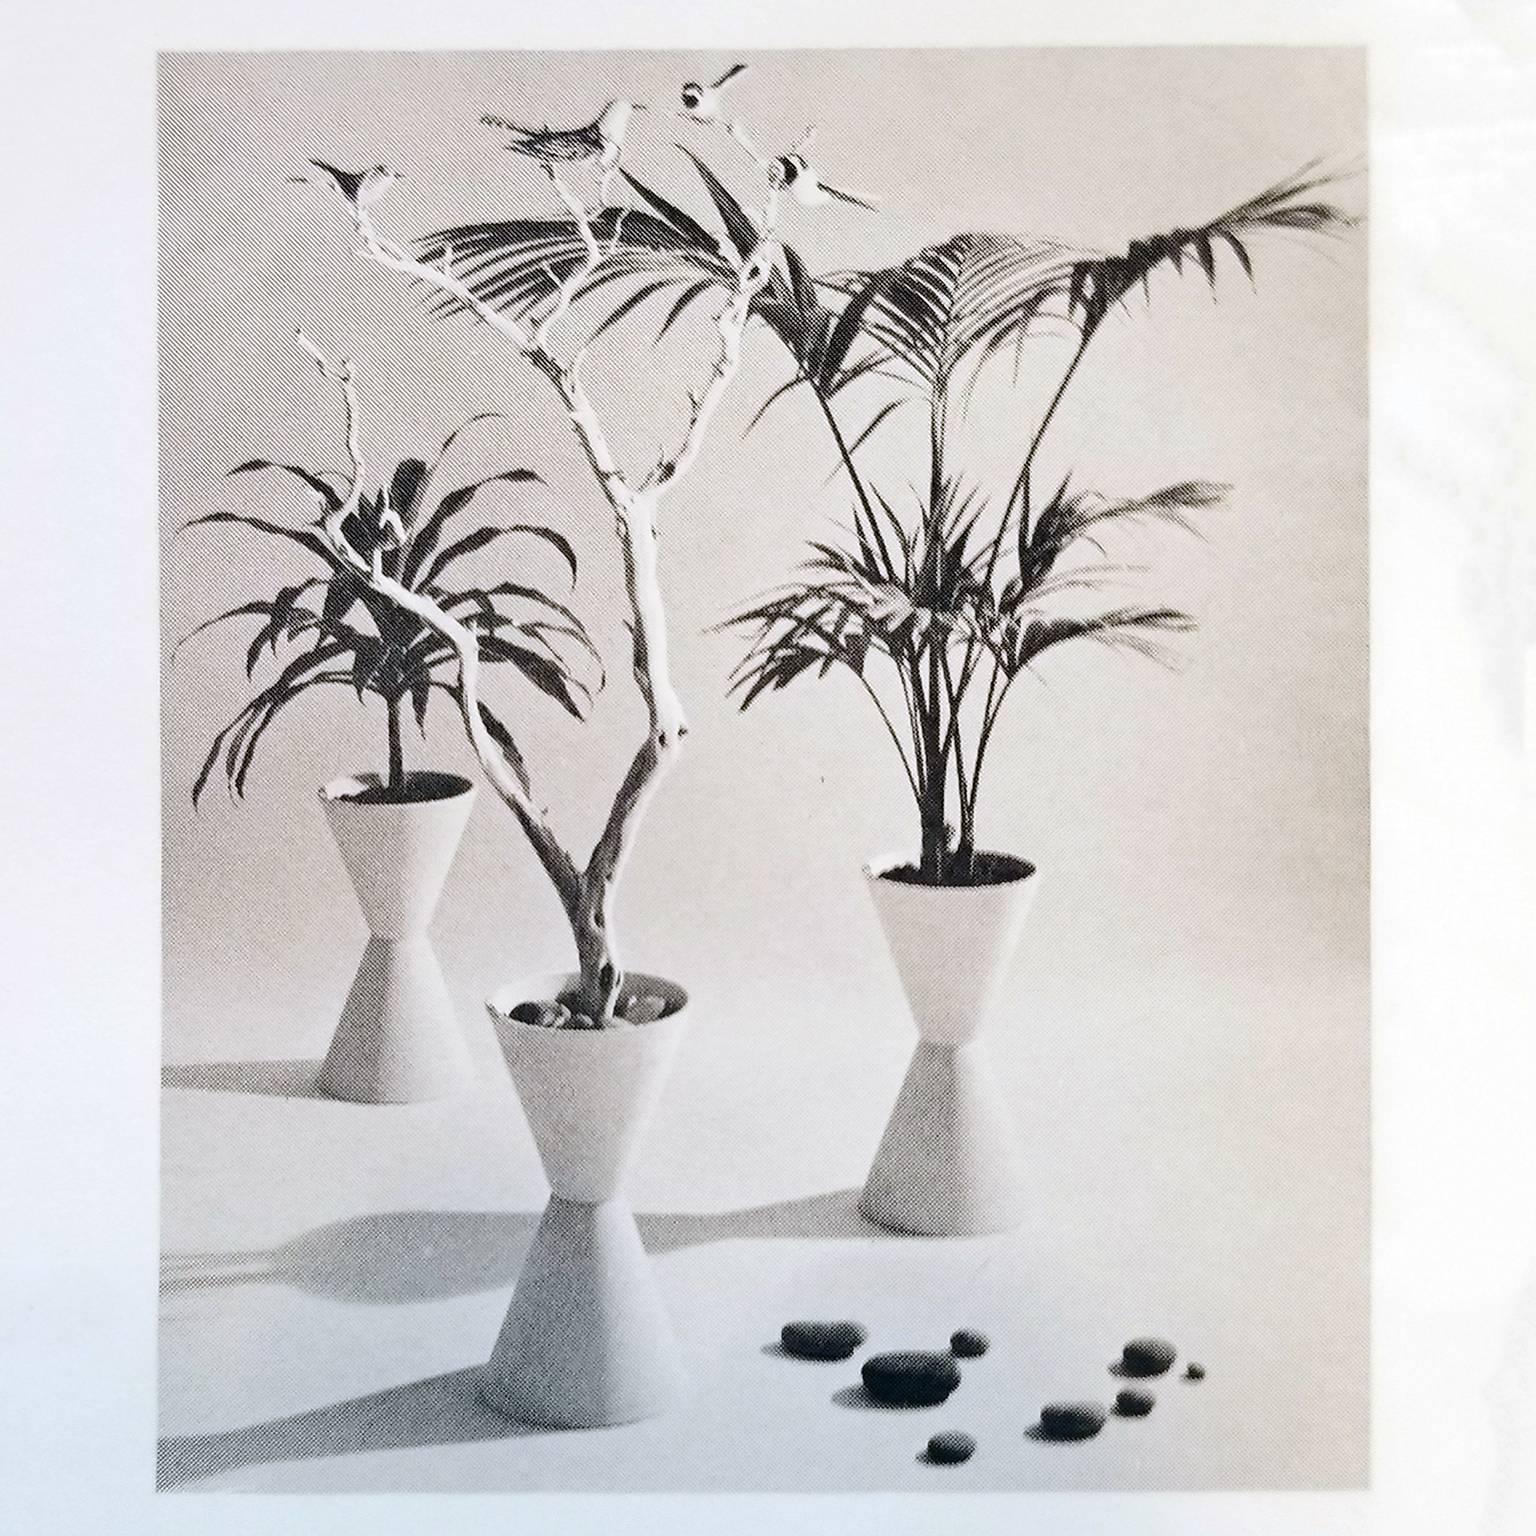 La Gardo Tackett for Architectural Pottery double cone planter model T-102, in bisque. Stamped. 1950s.